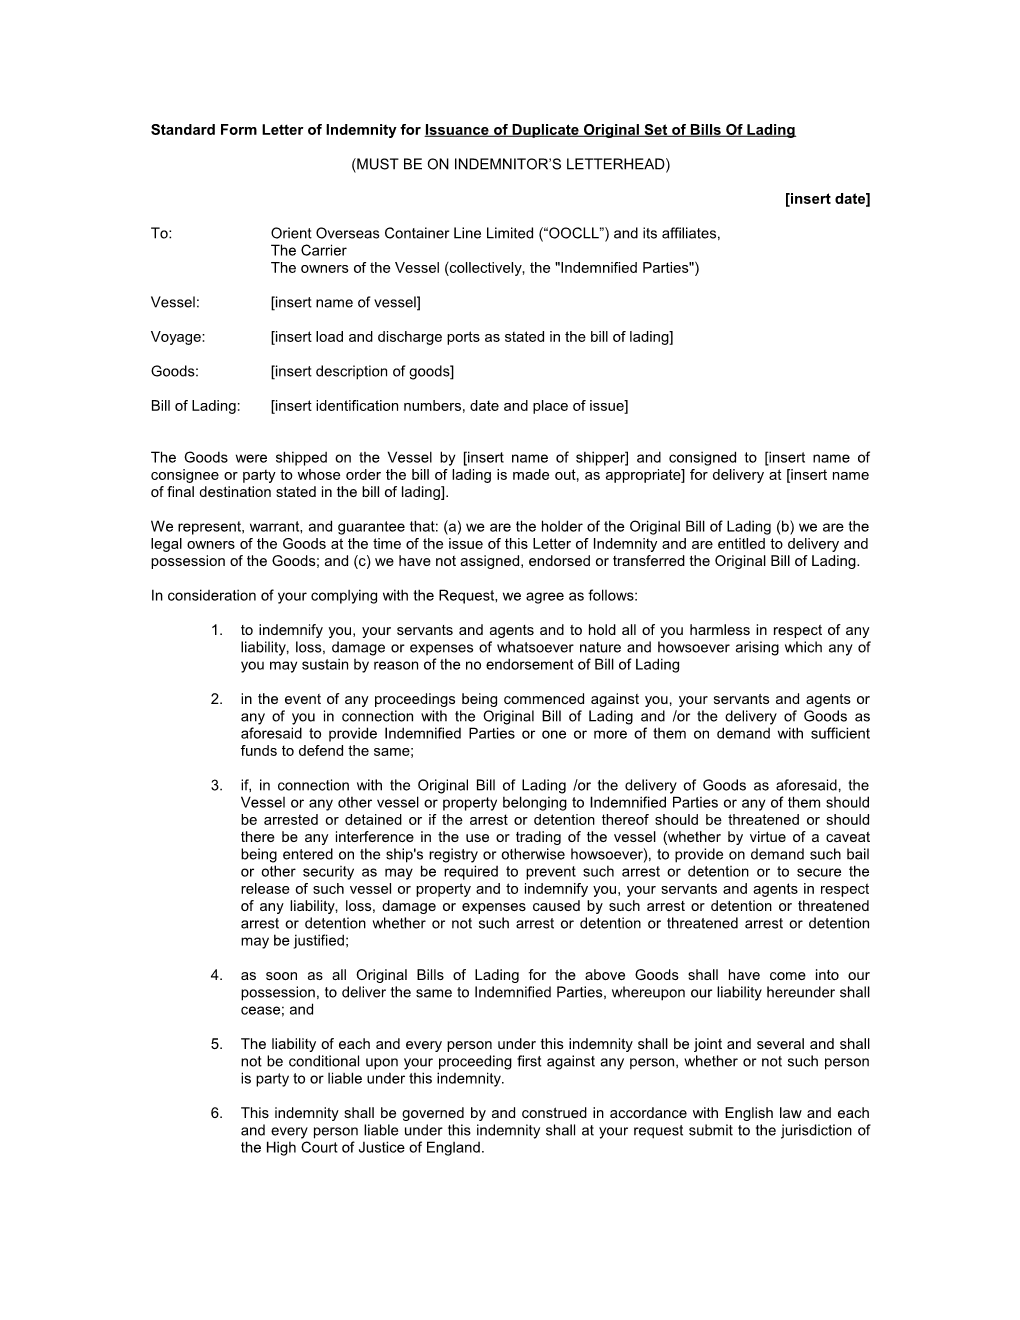 Standard Form Letter of Indemnity for Issuance of Duplicate Original Set of Bills of Lading